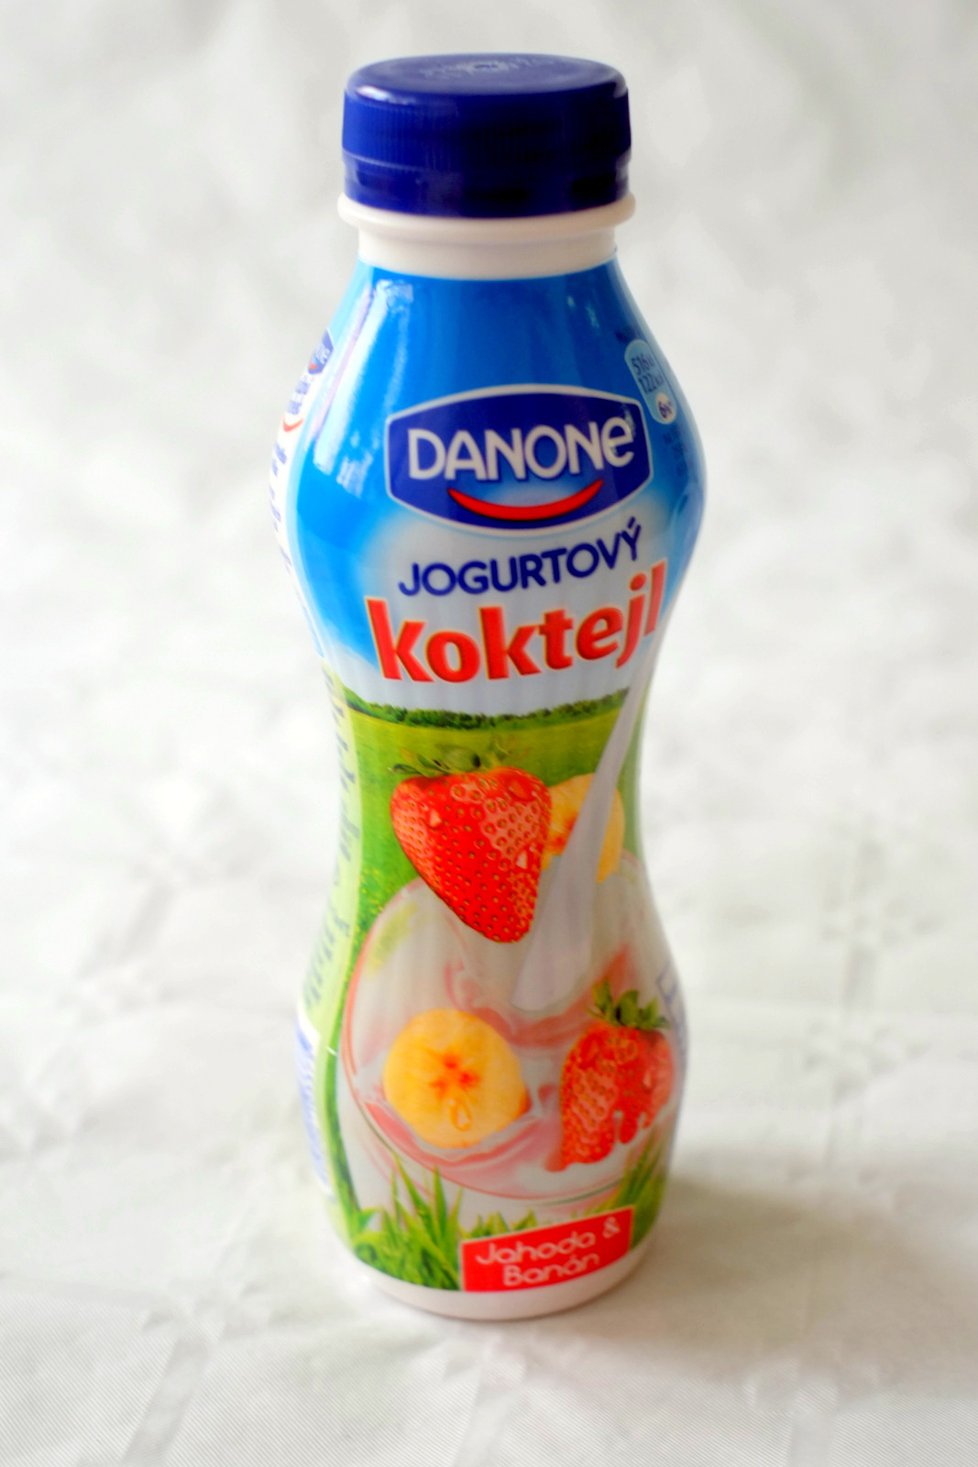 Danone jogurtový jahoda